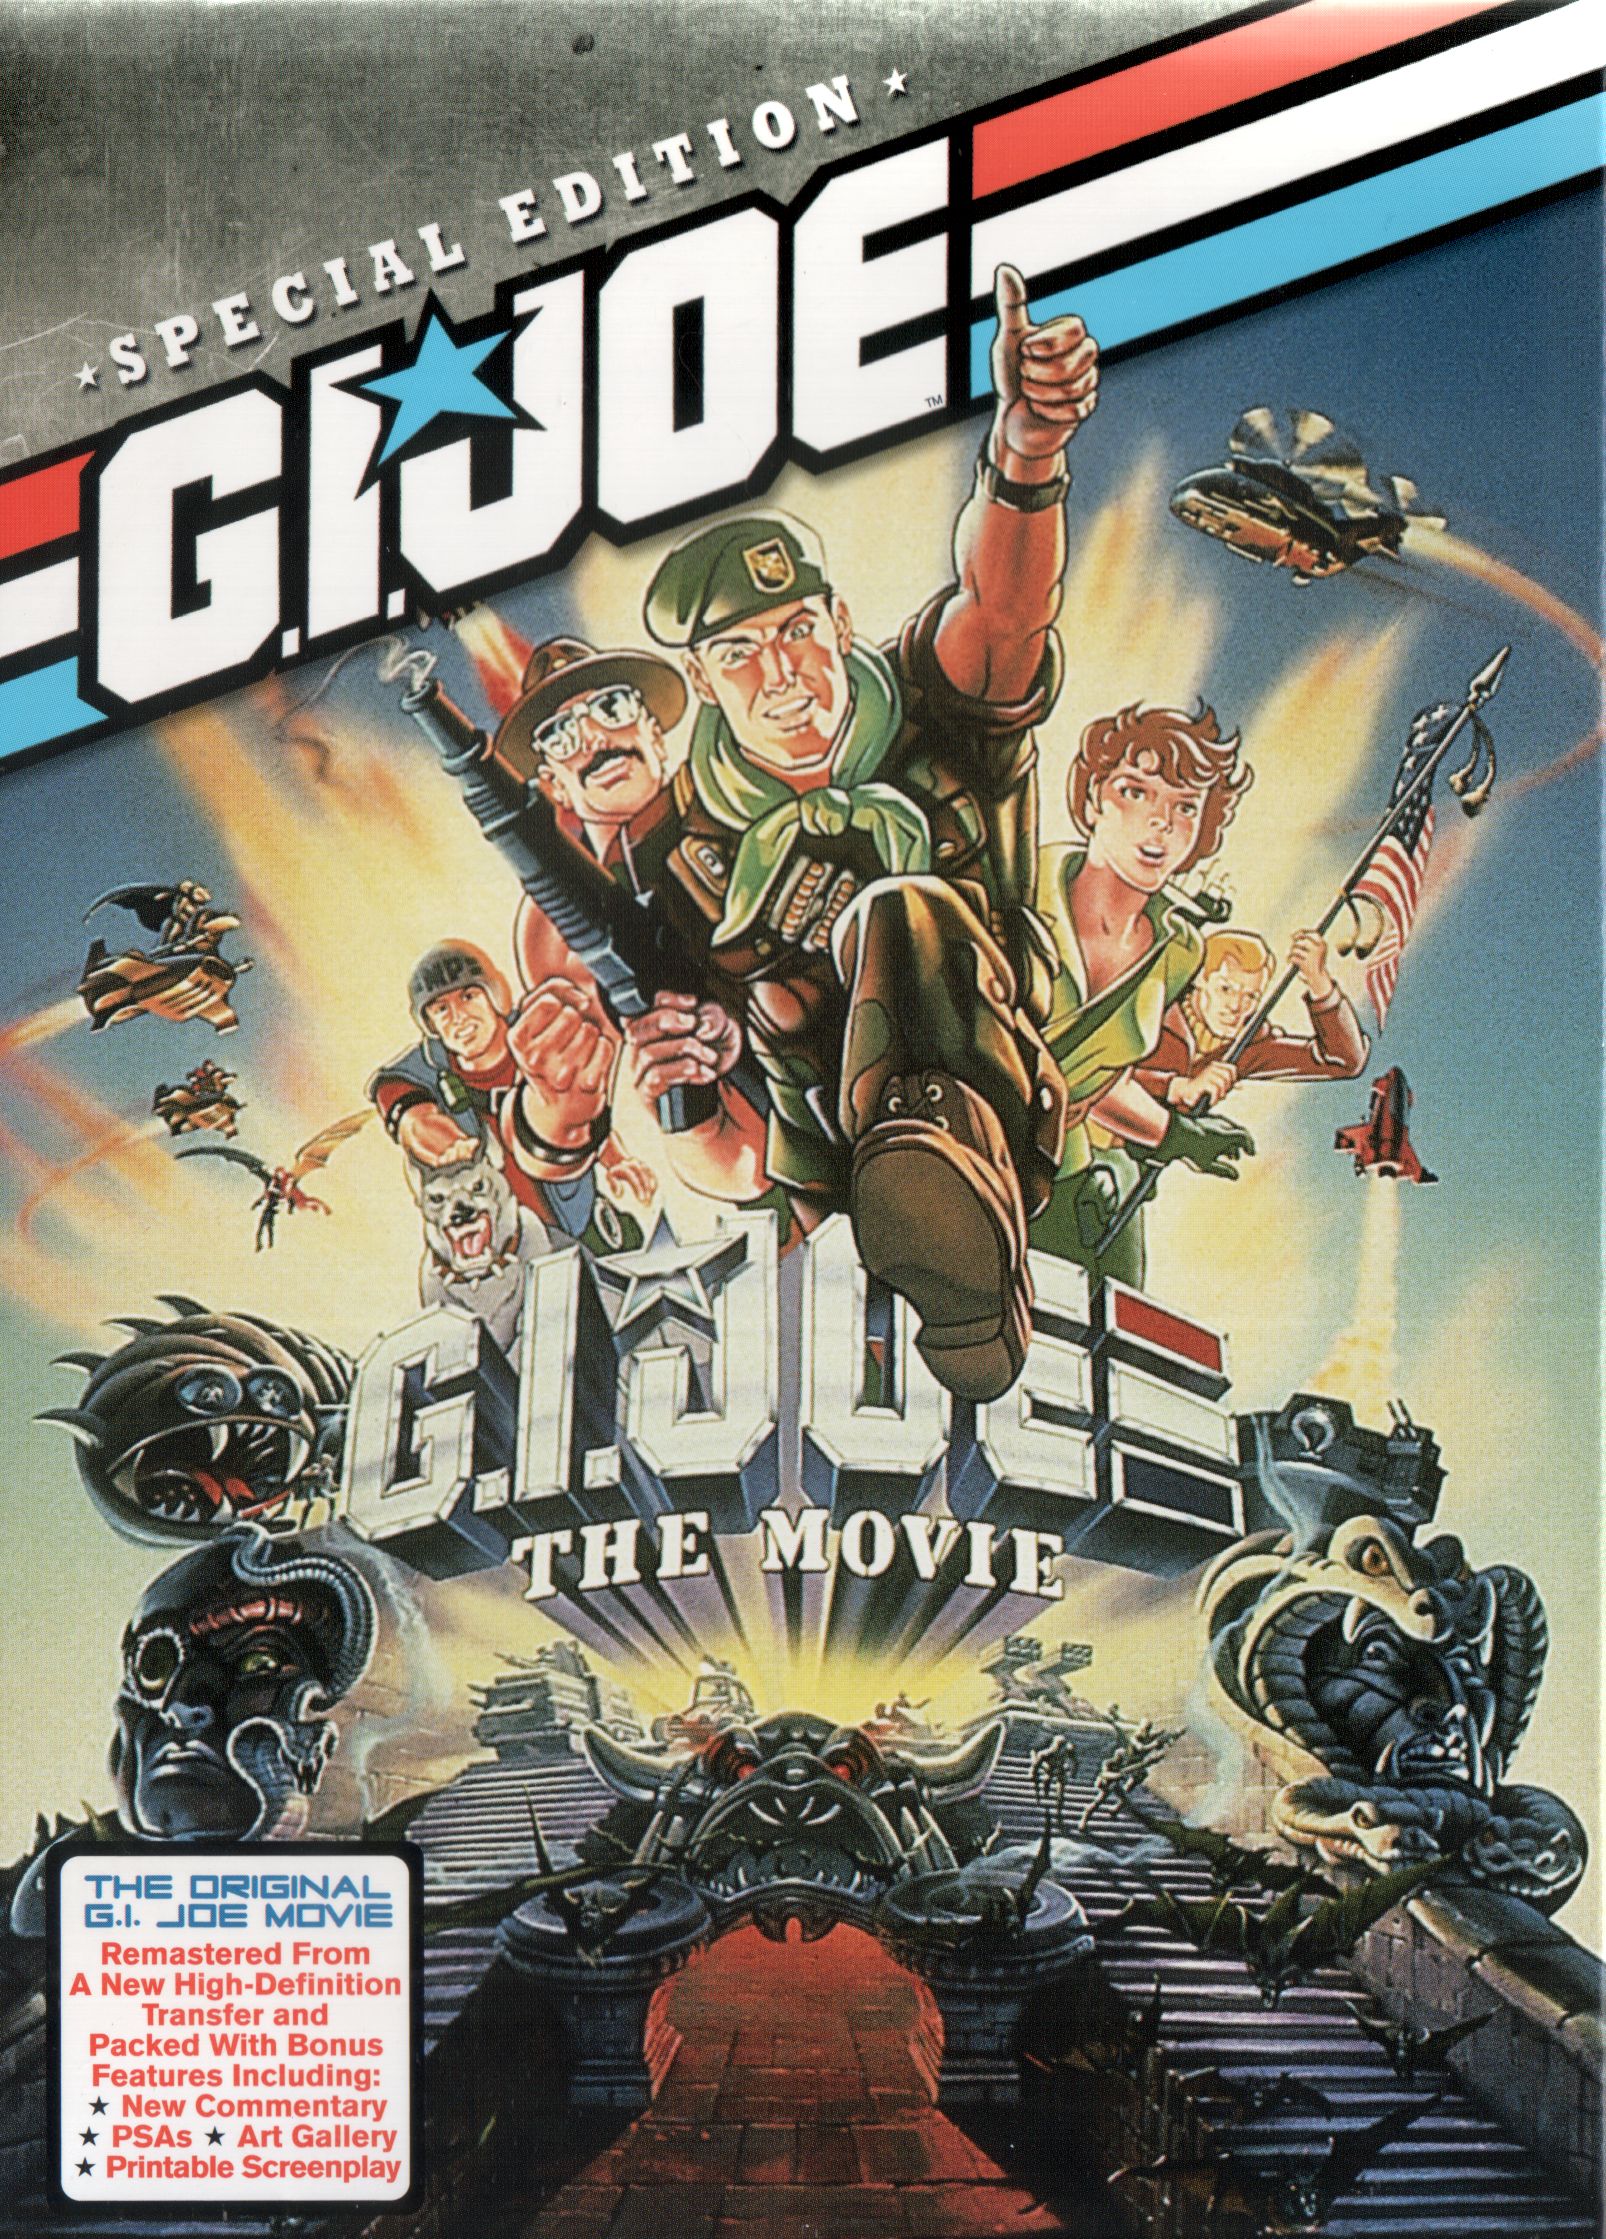 G.I. Joe - A mozifilm online